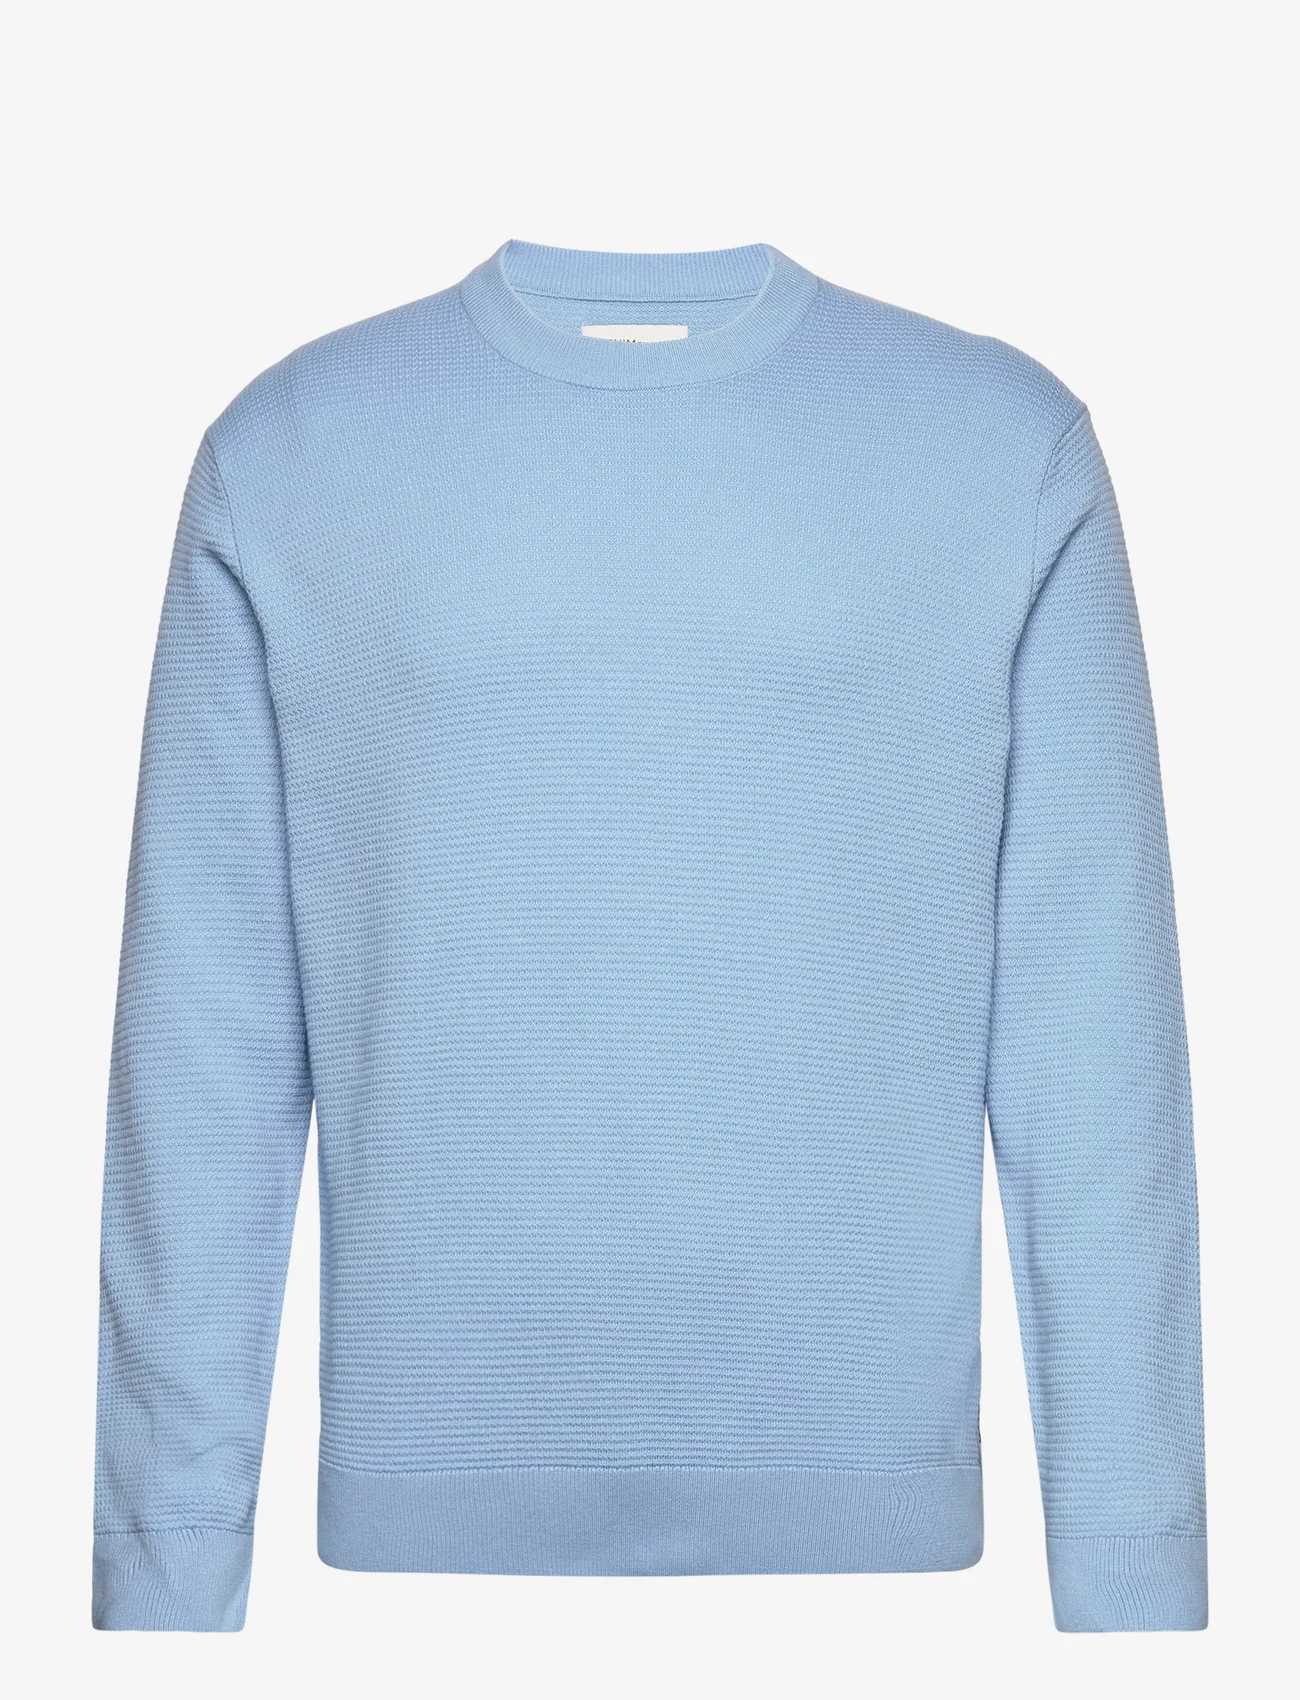 Tom Tailor - structured basic knit - rundhalsad - washed out middle blue - 0